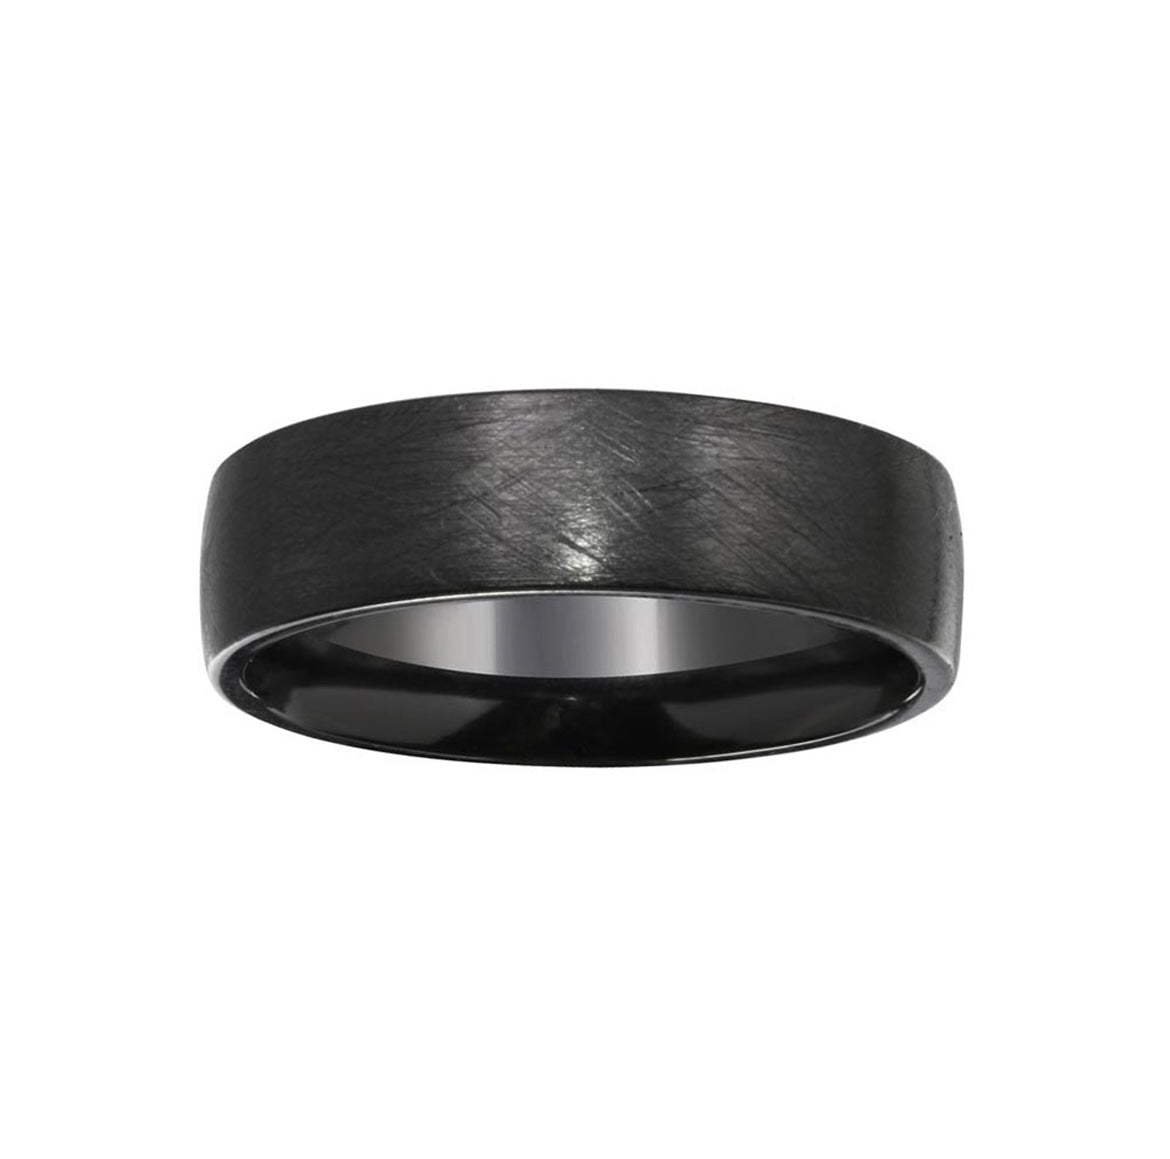 Buy Rhodium-Toned Rings for Men by PALMONAS Online | Ajio.com